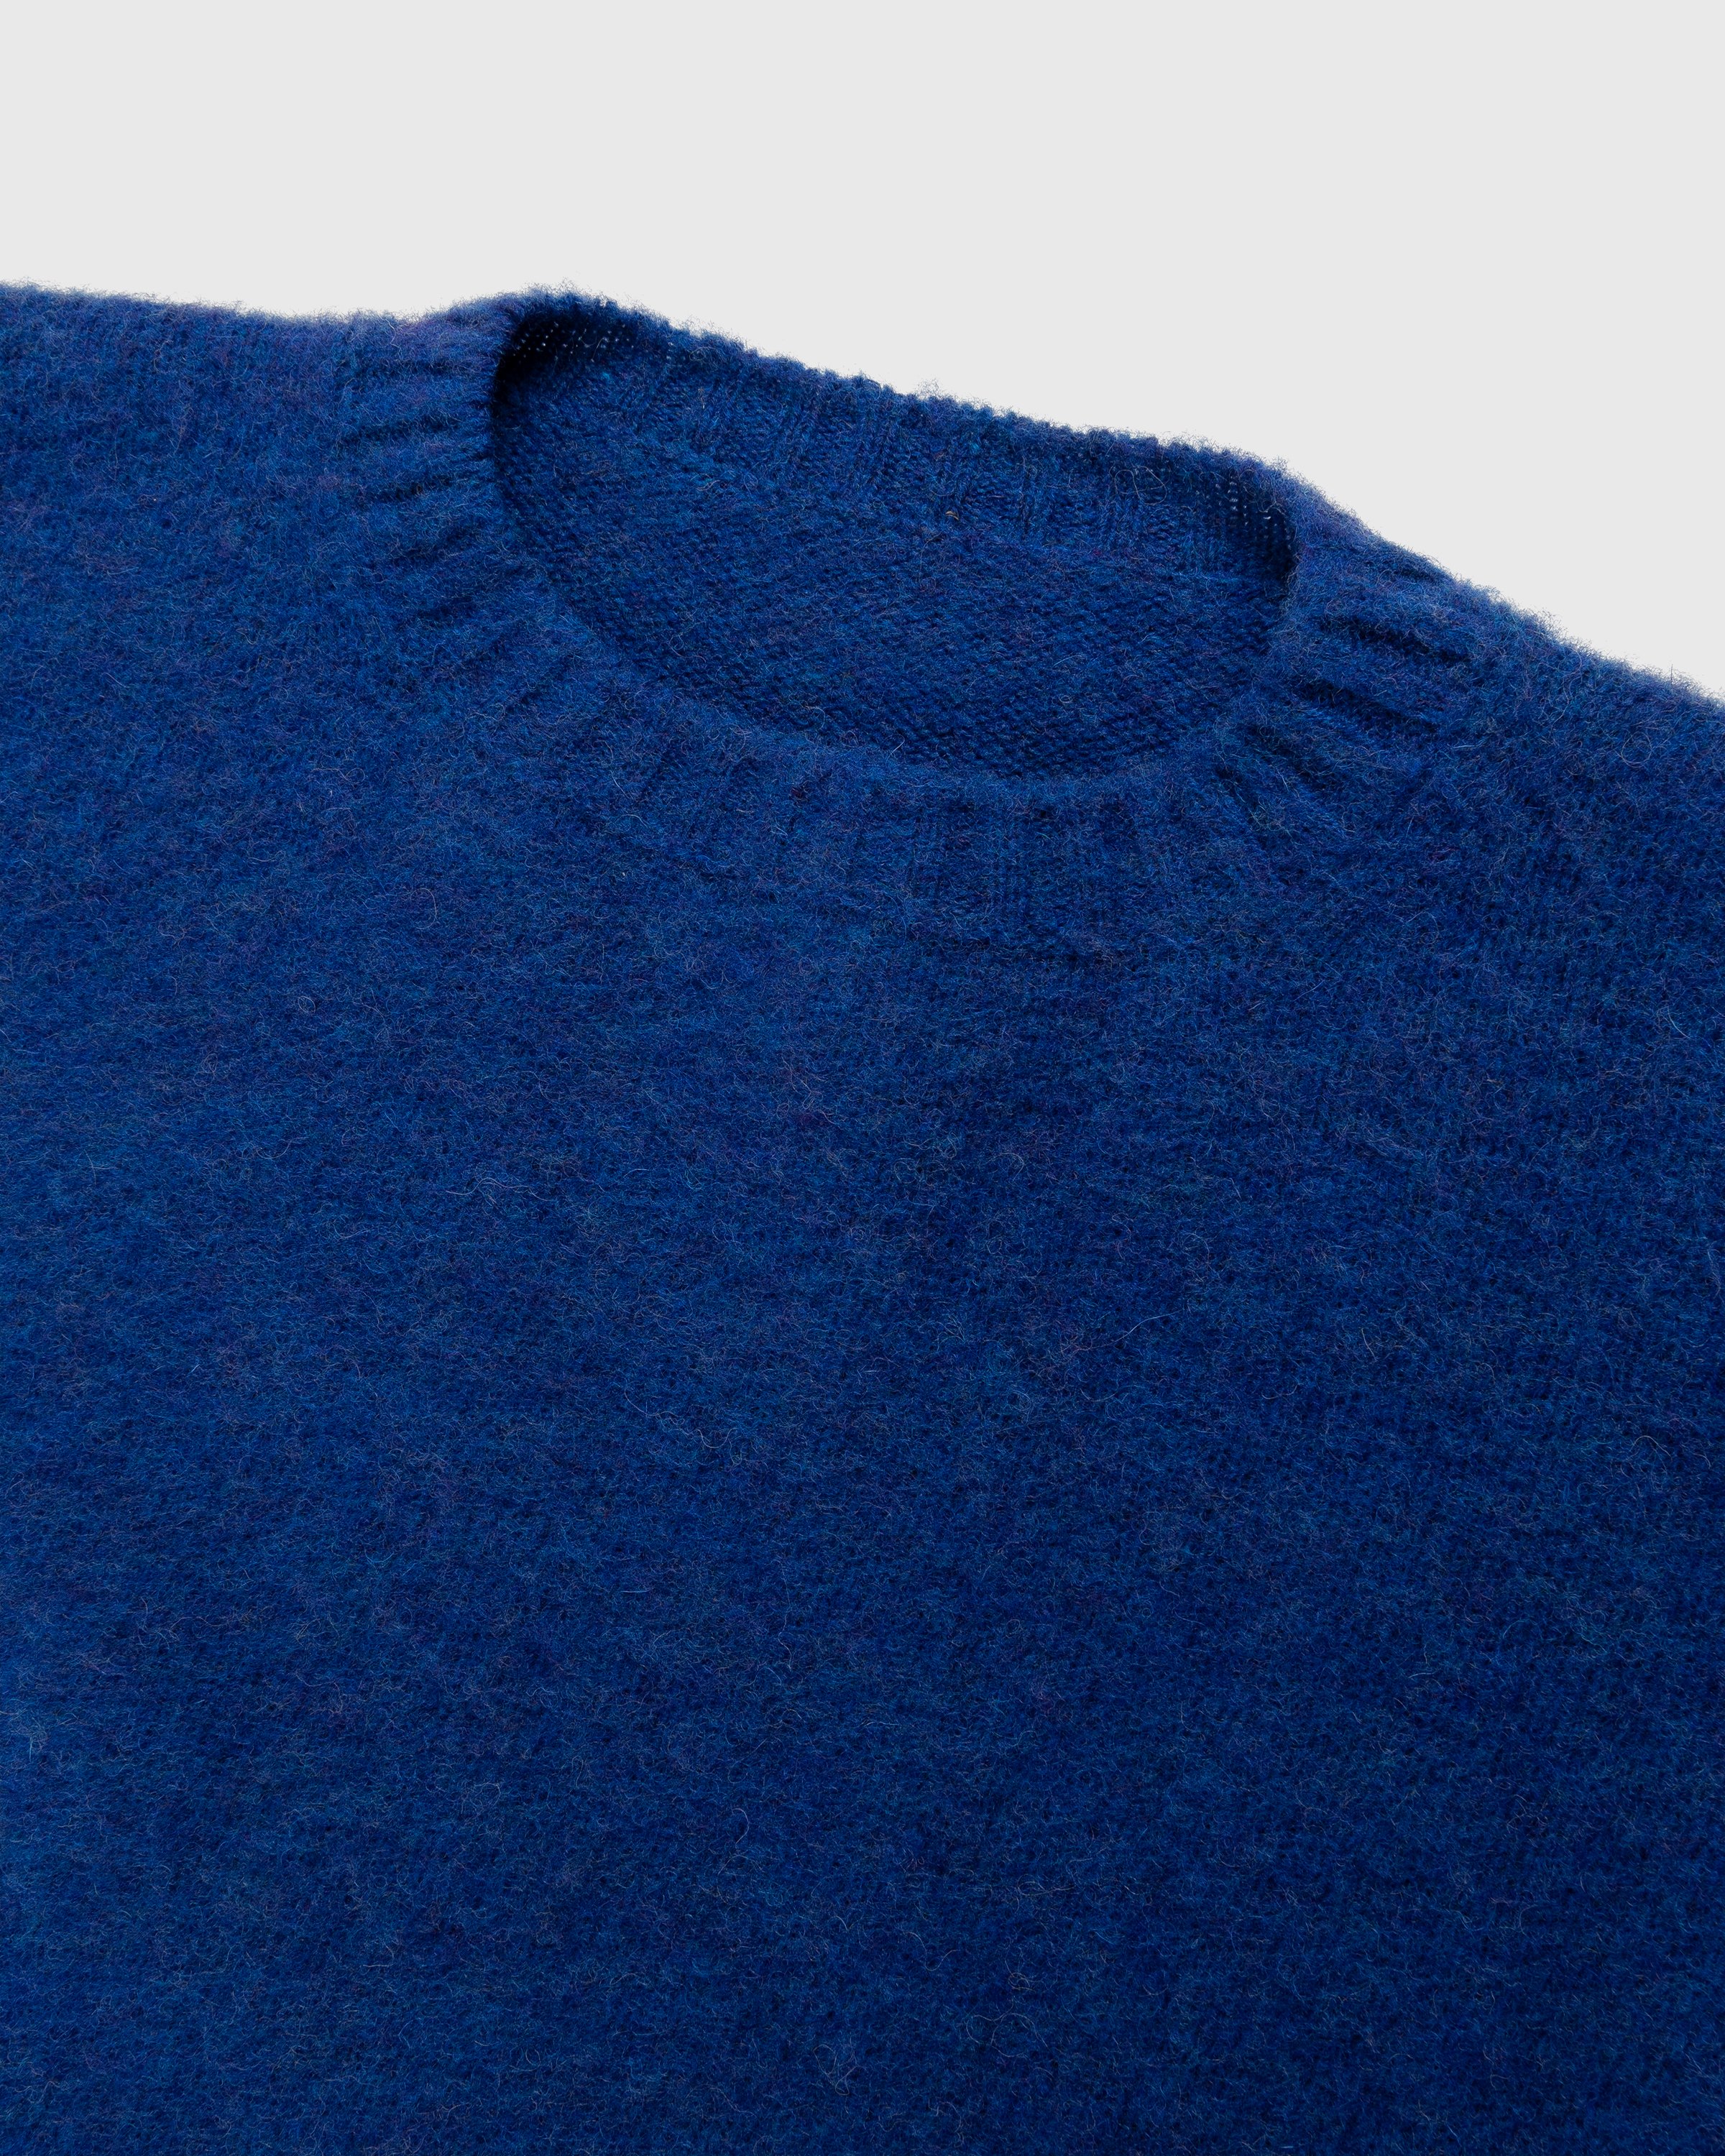 J. Press x Highsnobiety - Shaggy Dog Solid Sweater Blue - Clothing - Blue - Image 3